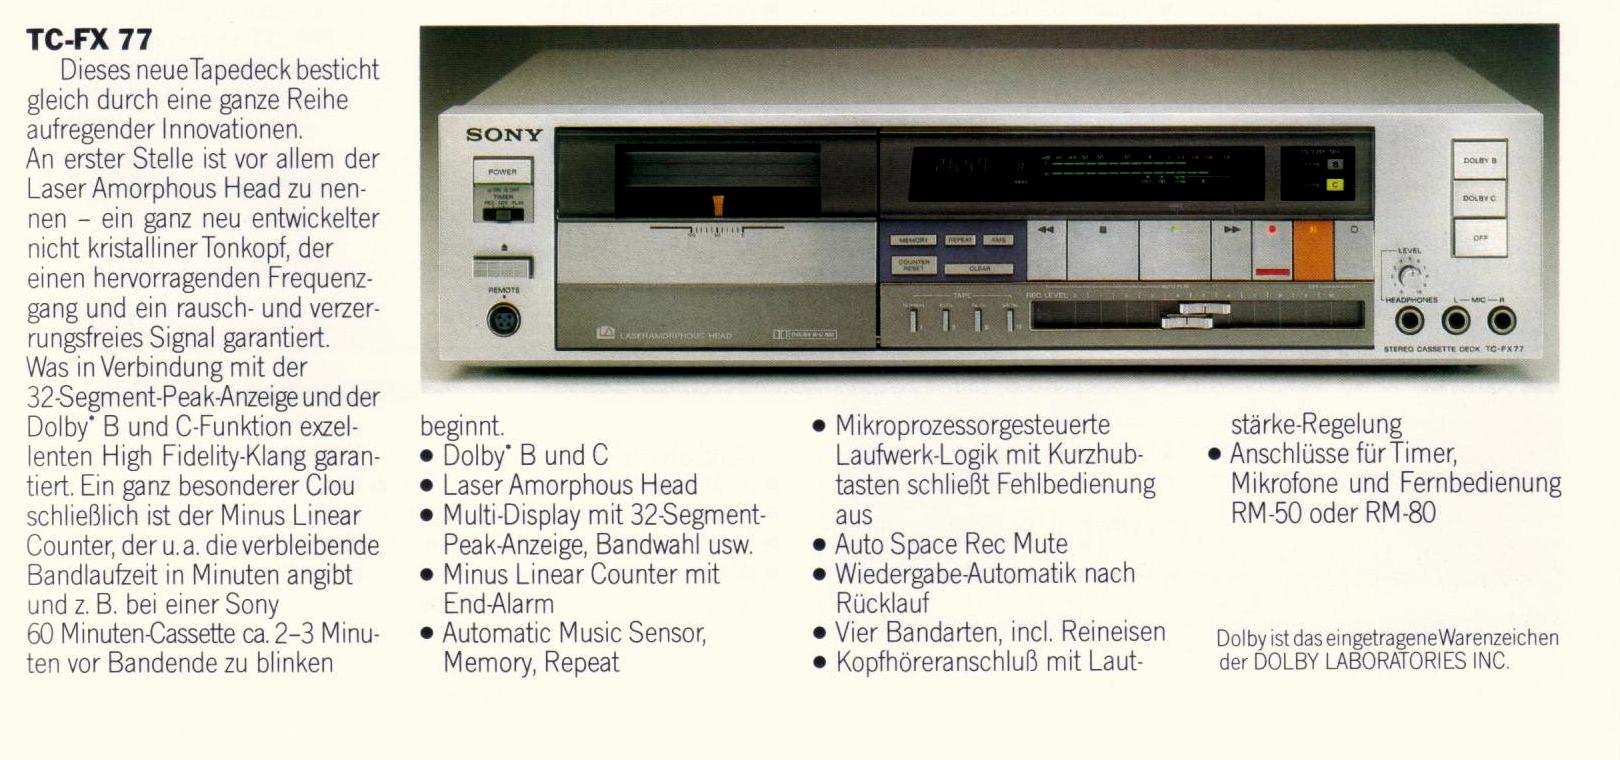 Sony TC-FX 77-Prospekt-1982.jpg